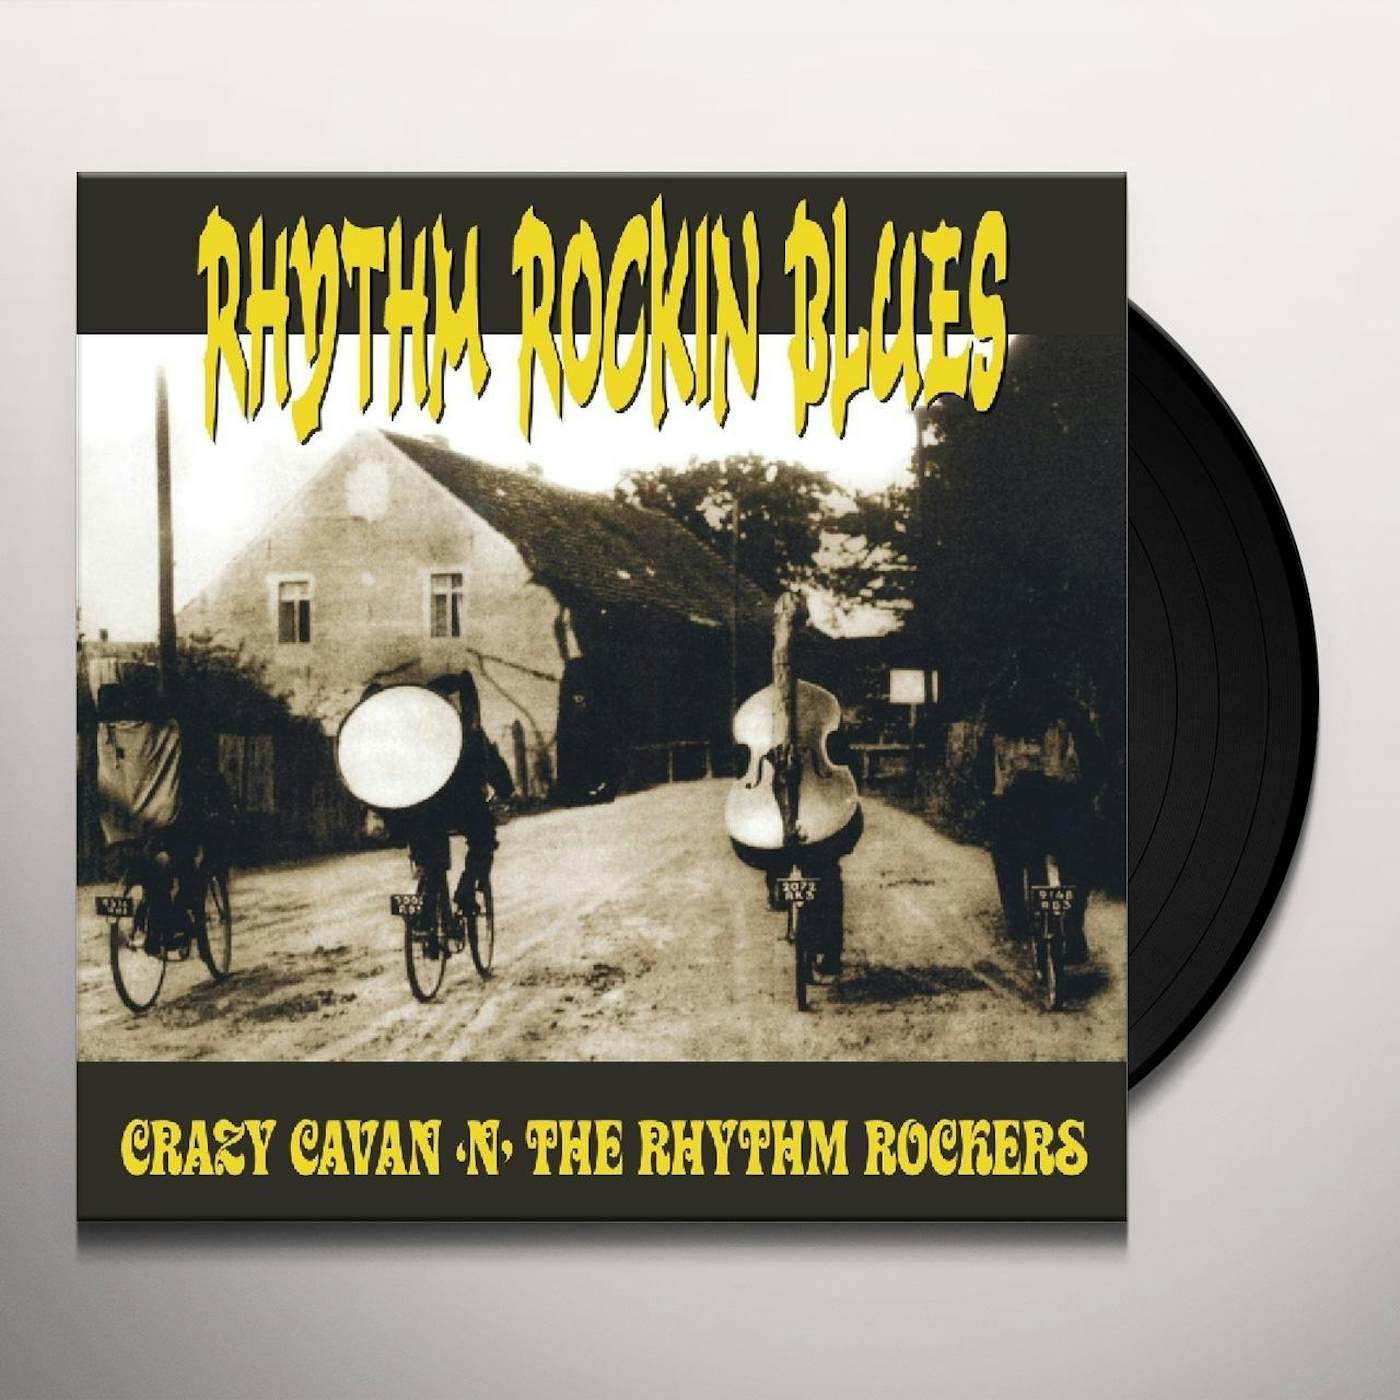 Vinyl Album - Crazy Cavan And The Rhythm Rockers - Rockabilly Rules Ok! -  Big Beat - France